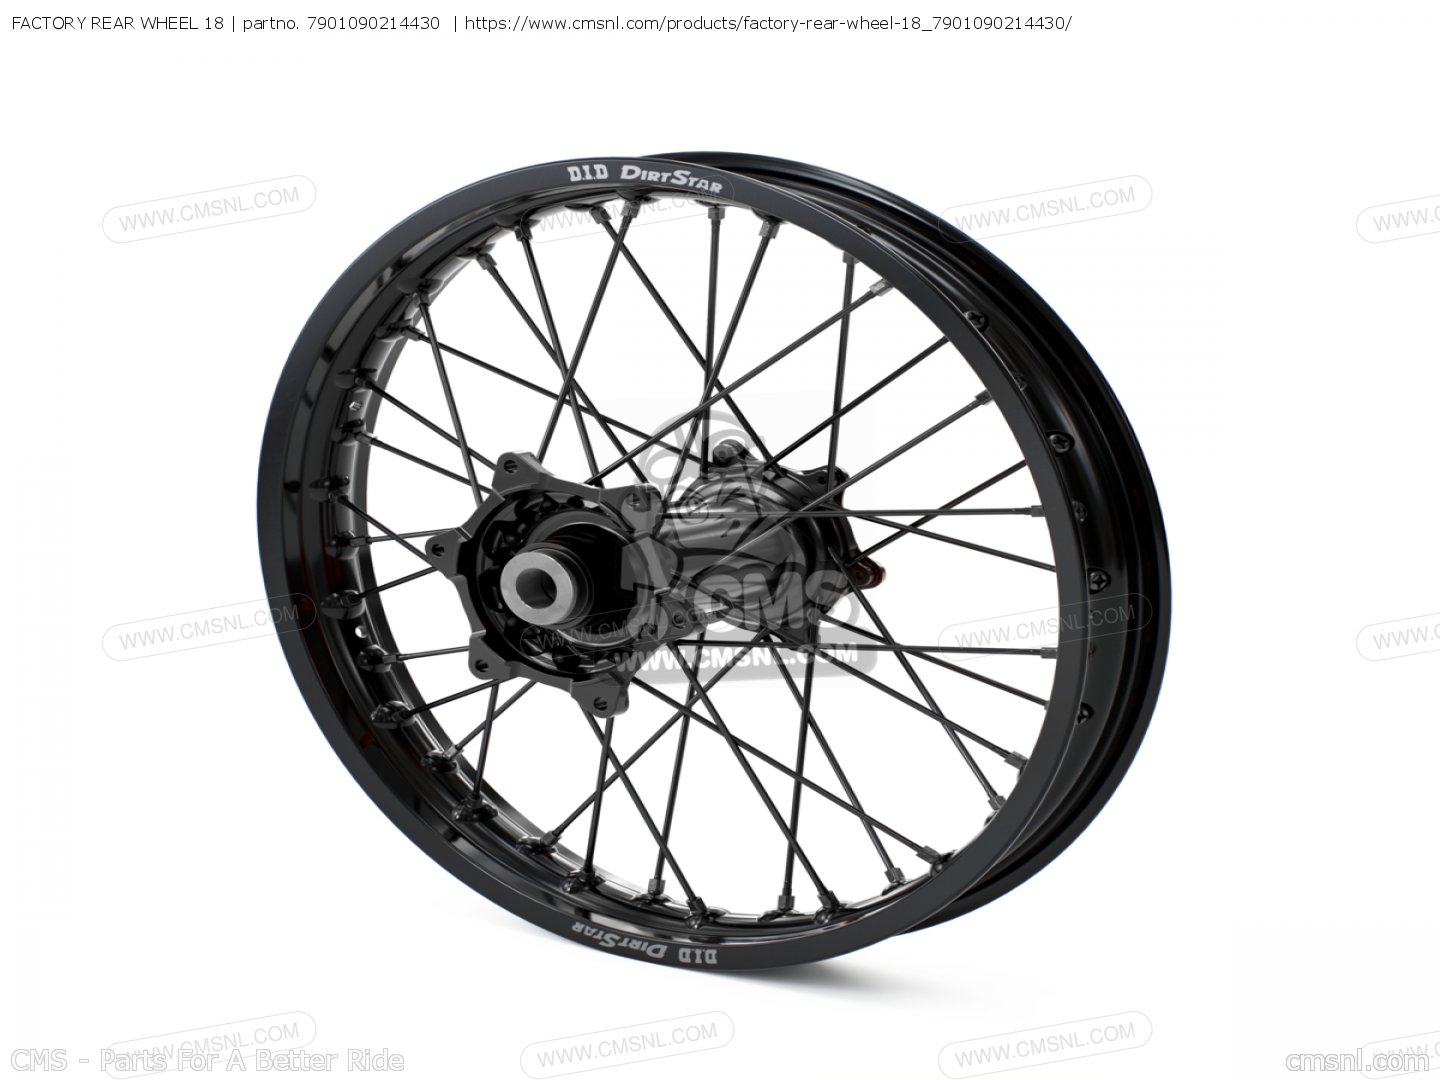 KTM Genuine / ケーティーエム純正 Factory Rear Wheel 18